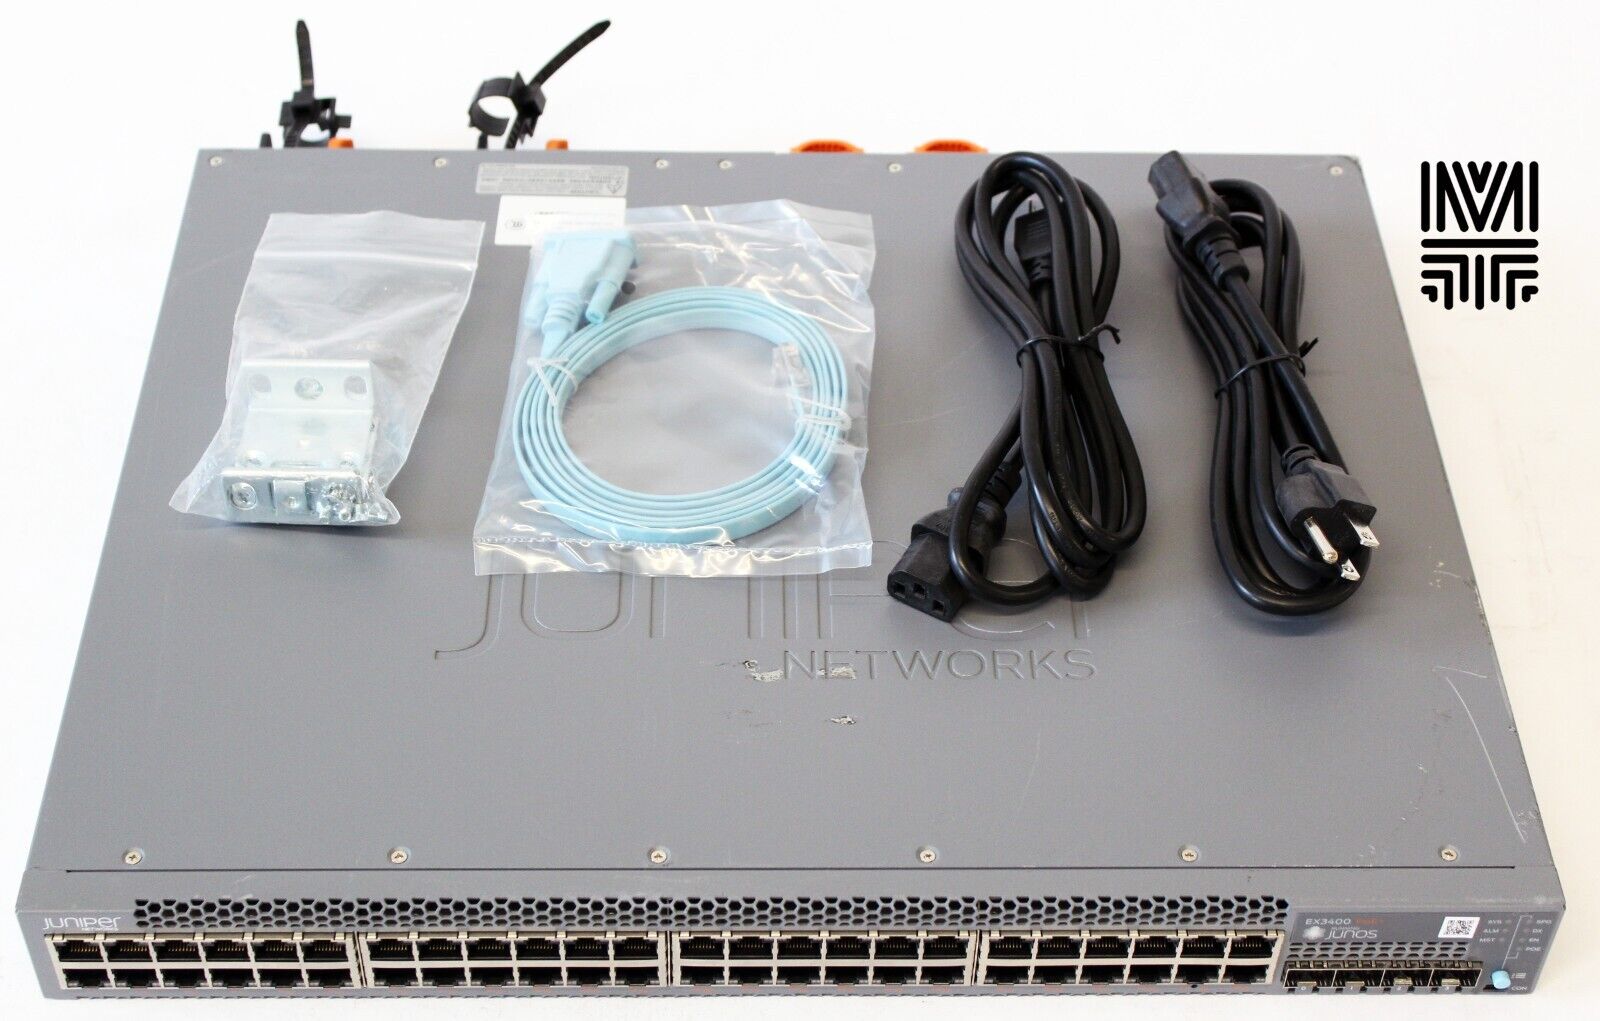 JUNIPER EX3400-48P 48x 1GB PoE+ RJ-45 4x 10GB SFP+ 2x 40GB QSFP+, DUAL AC POWER